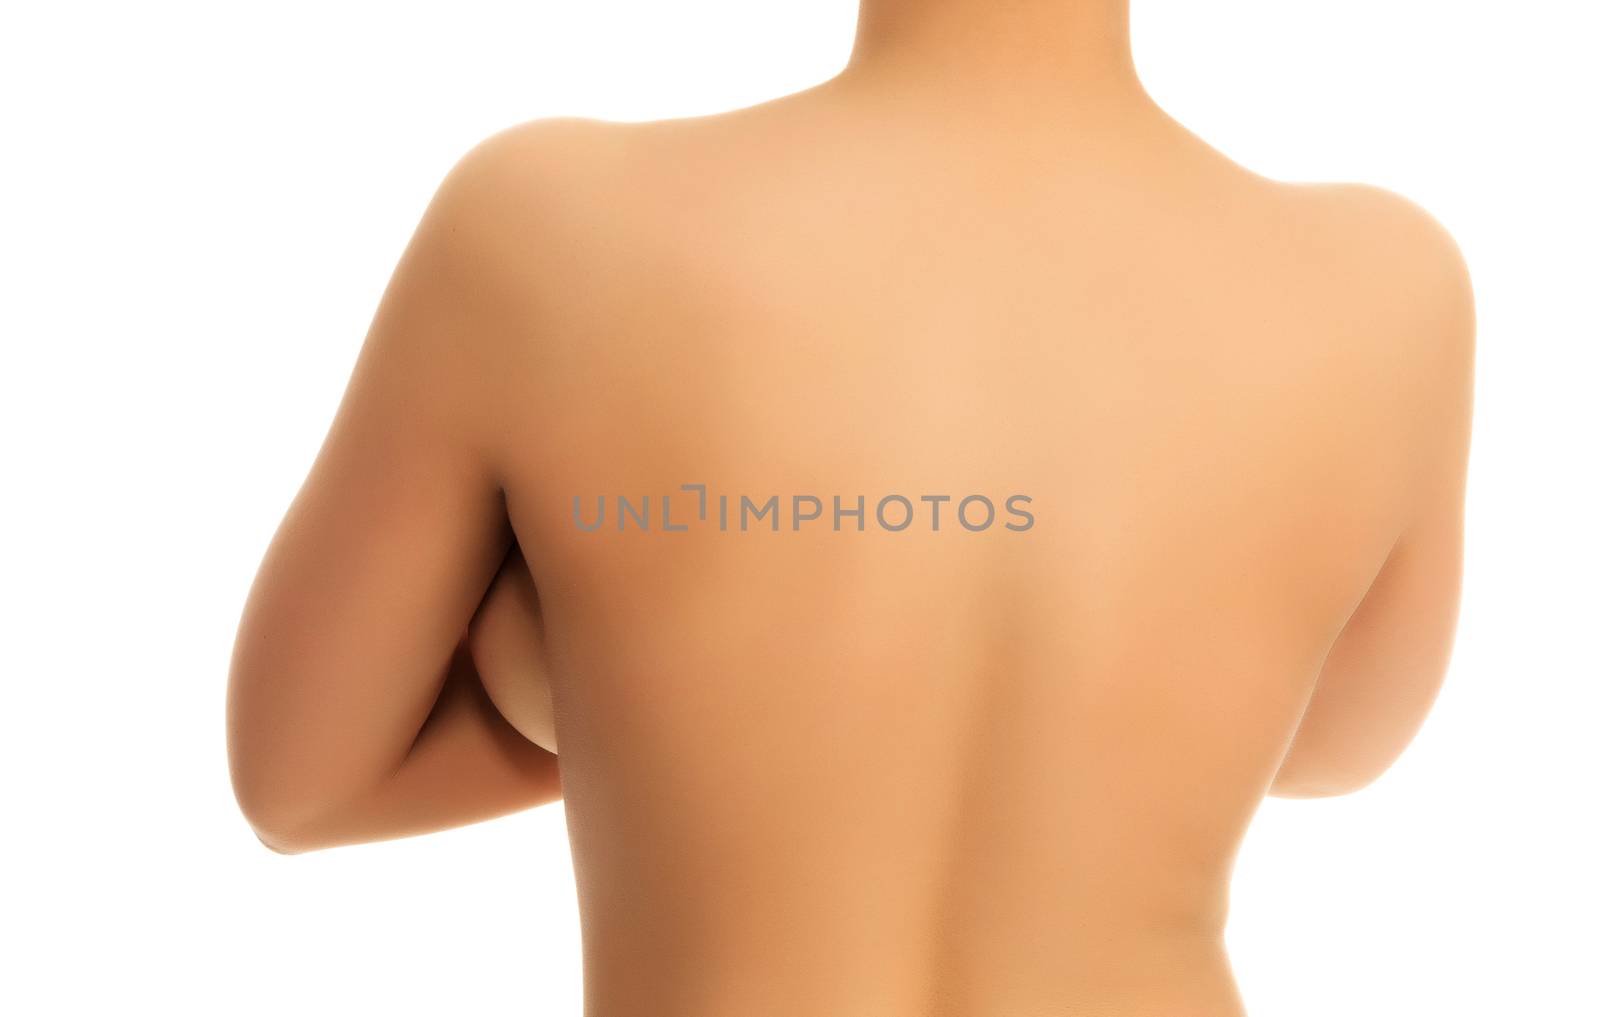 naked female back, white background, isolated, copyspace by Nobilior